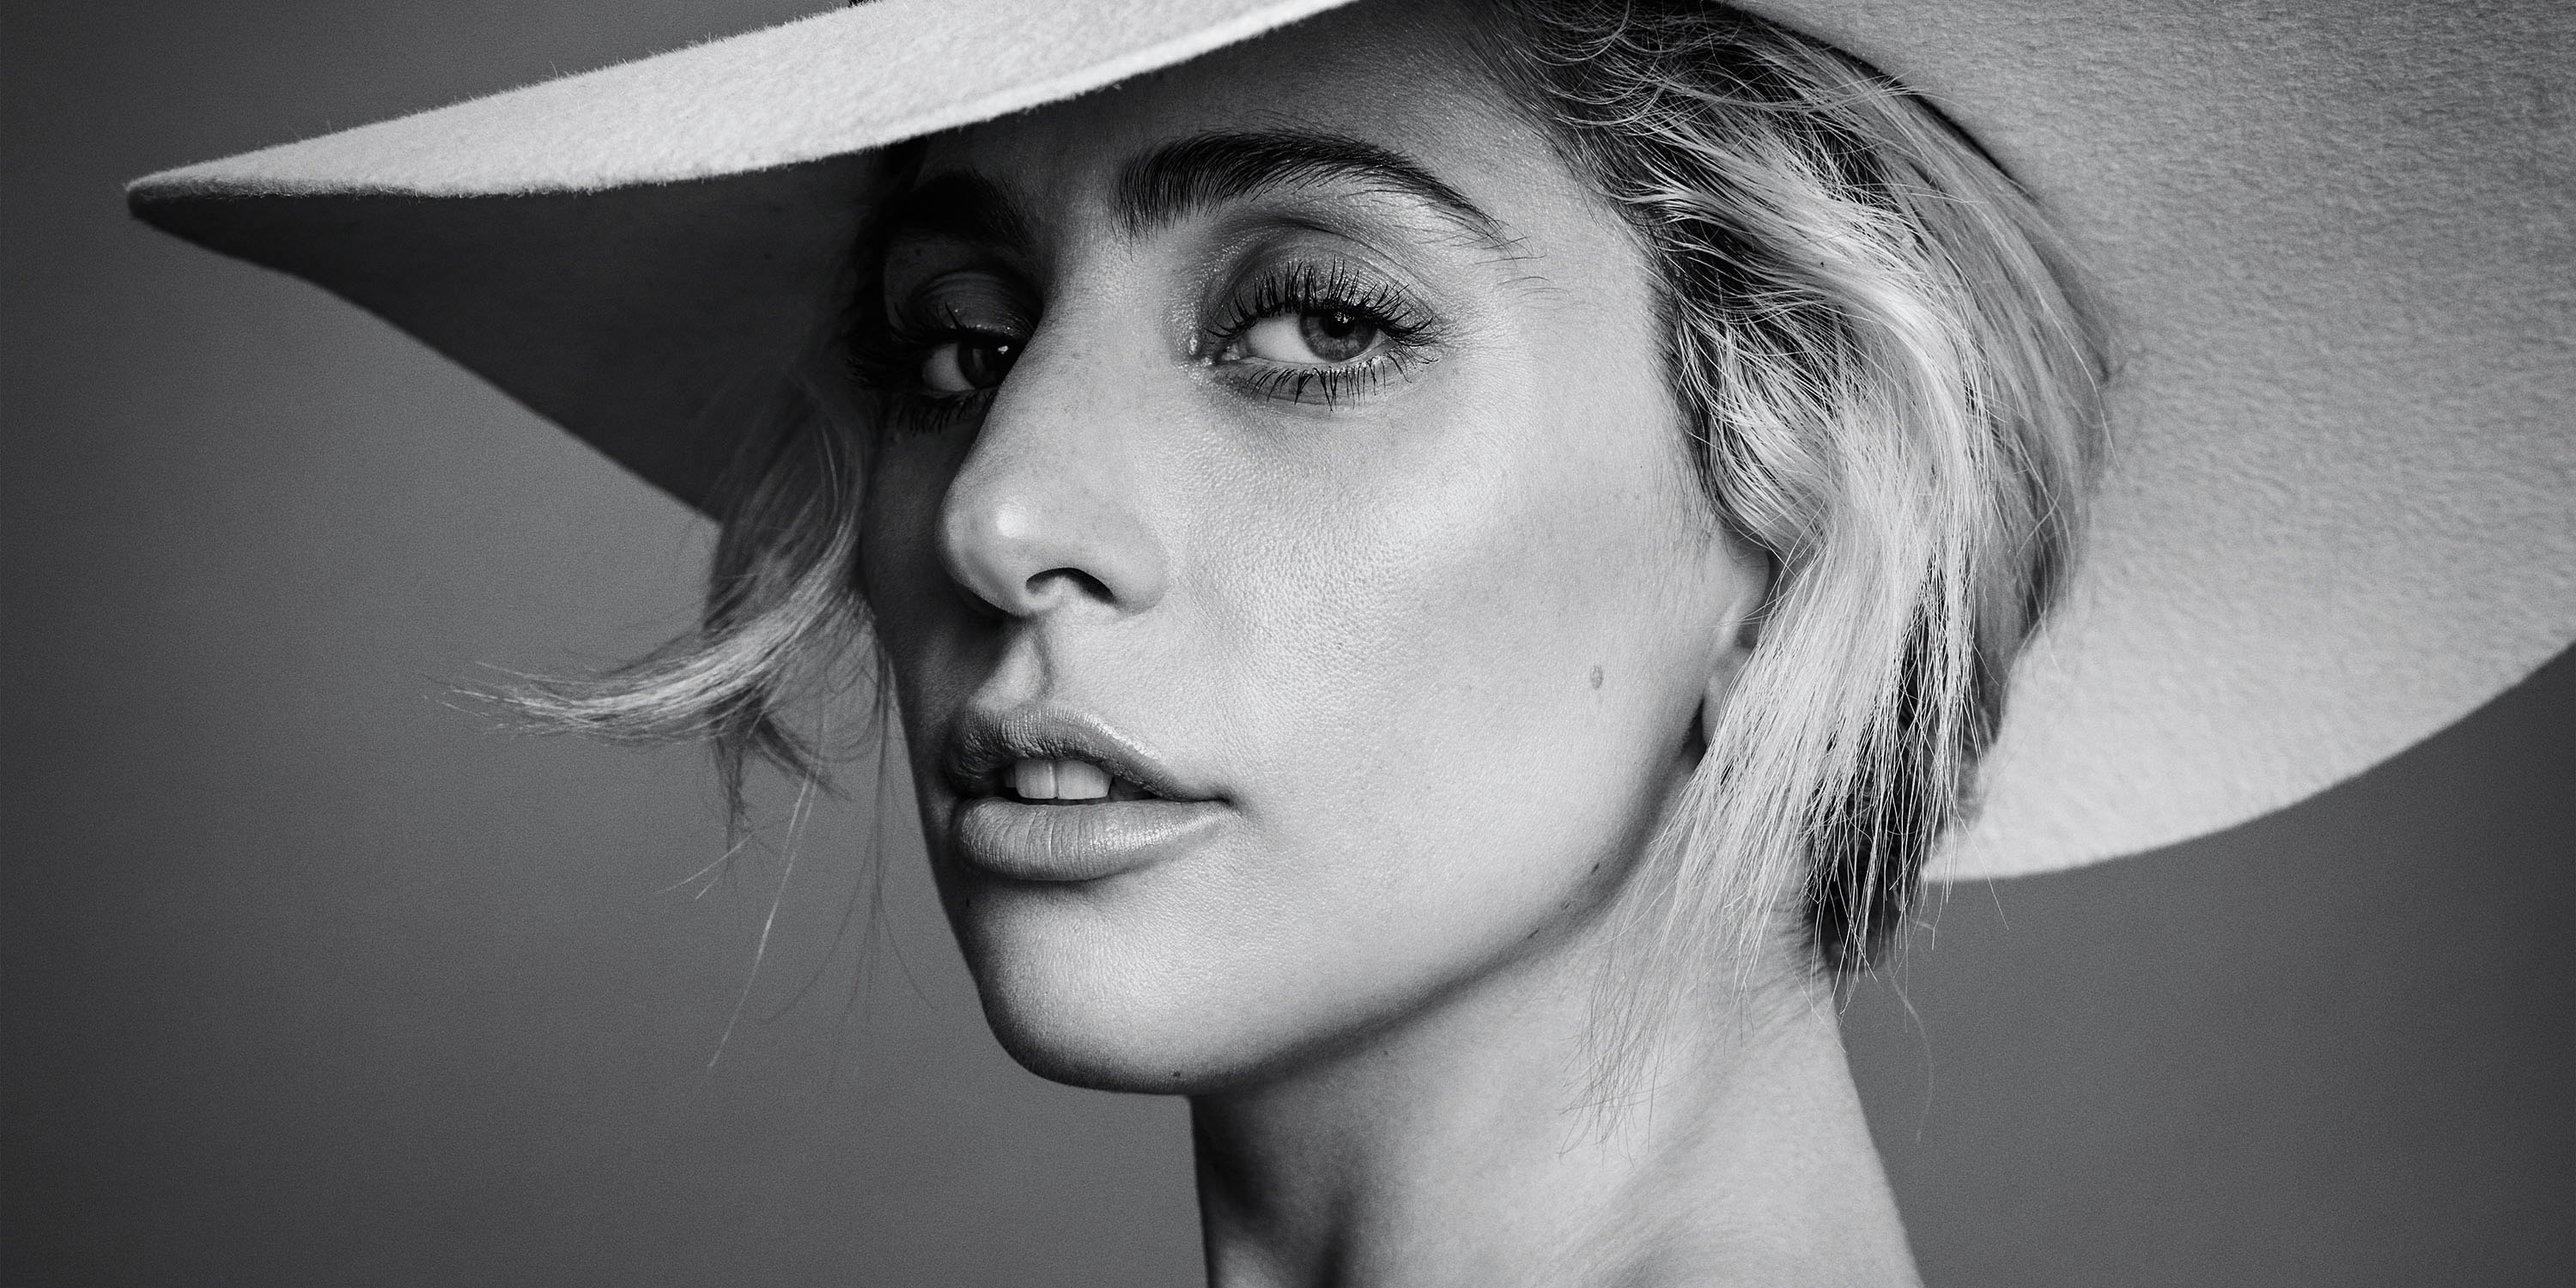 Lady Gaga estrenará nueva música durante su gira mundial. Cusica plus.